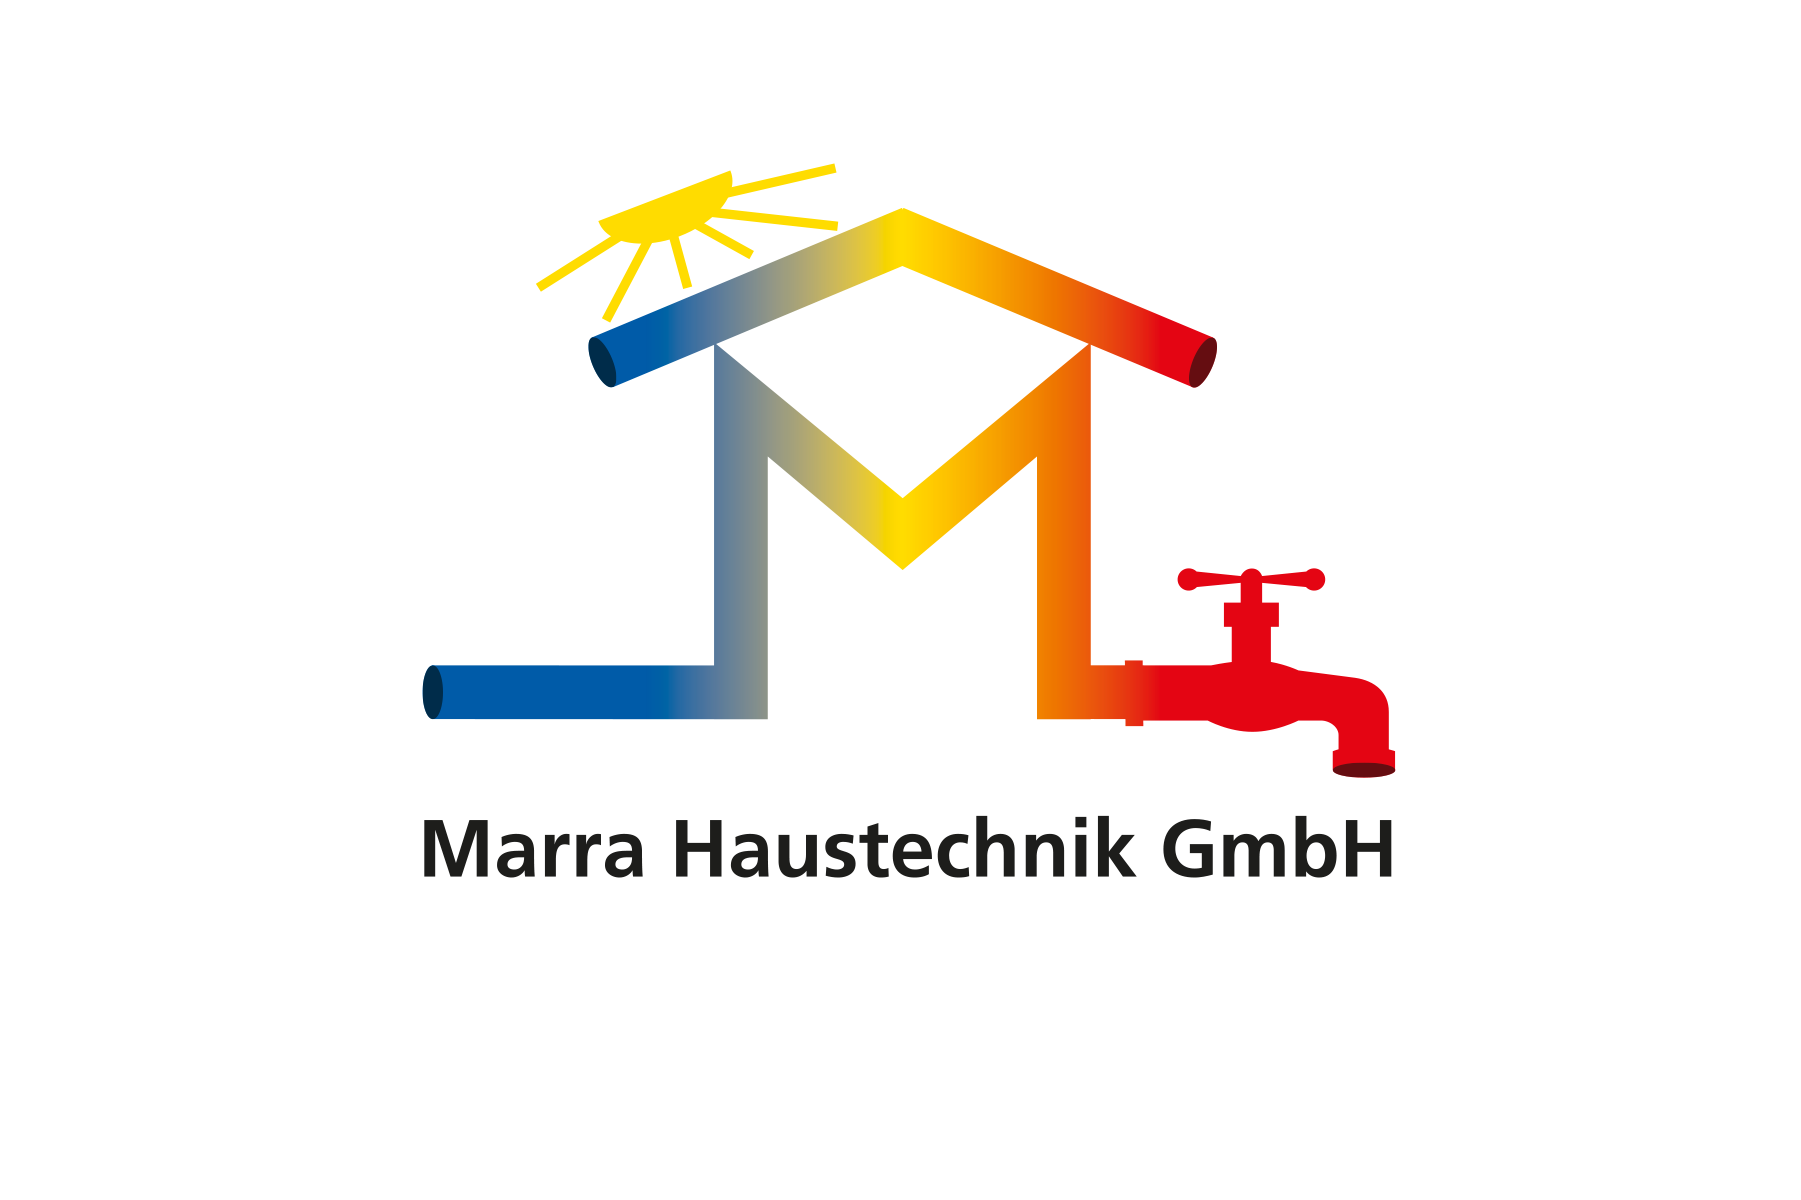 Marra Haustechnik GmbH